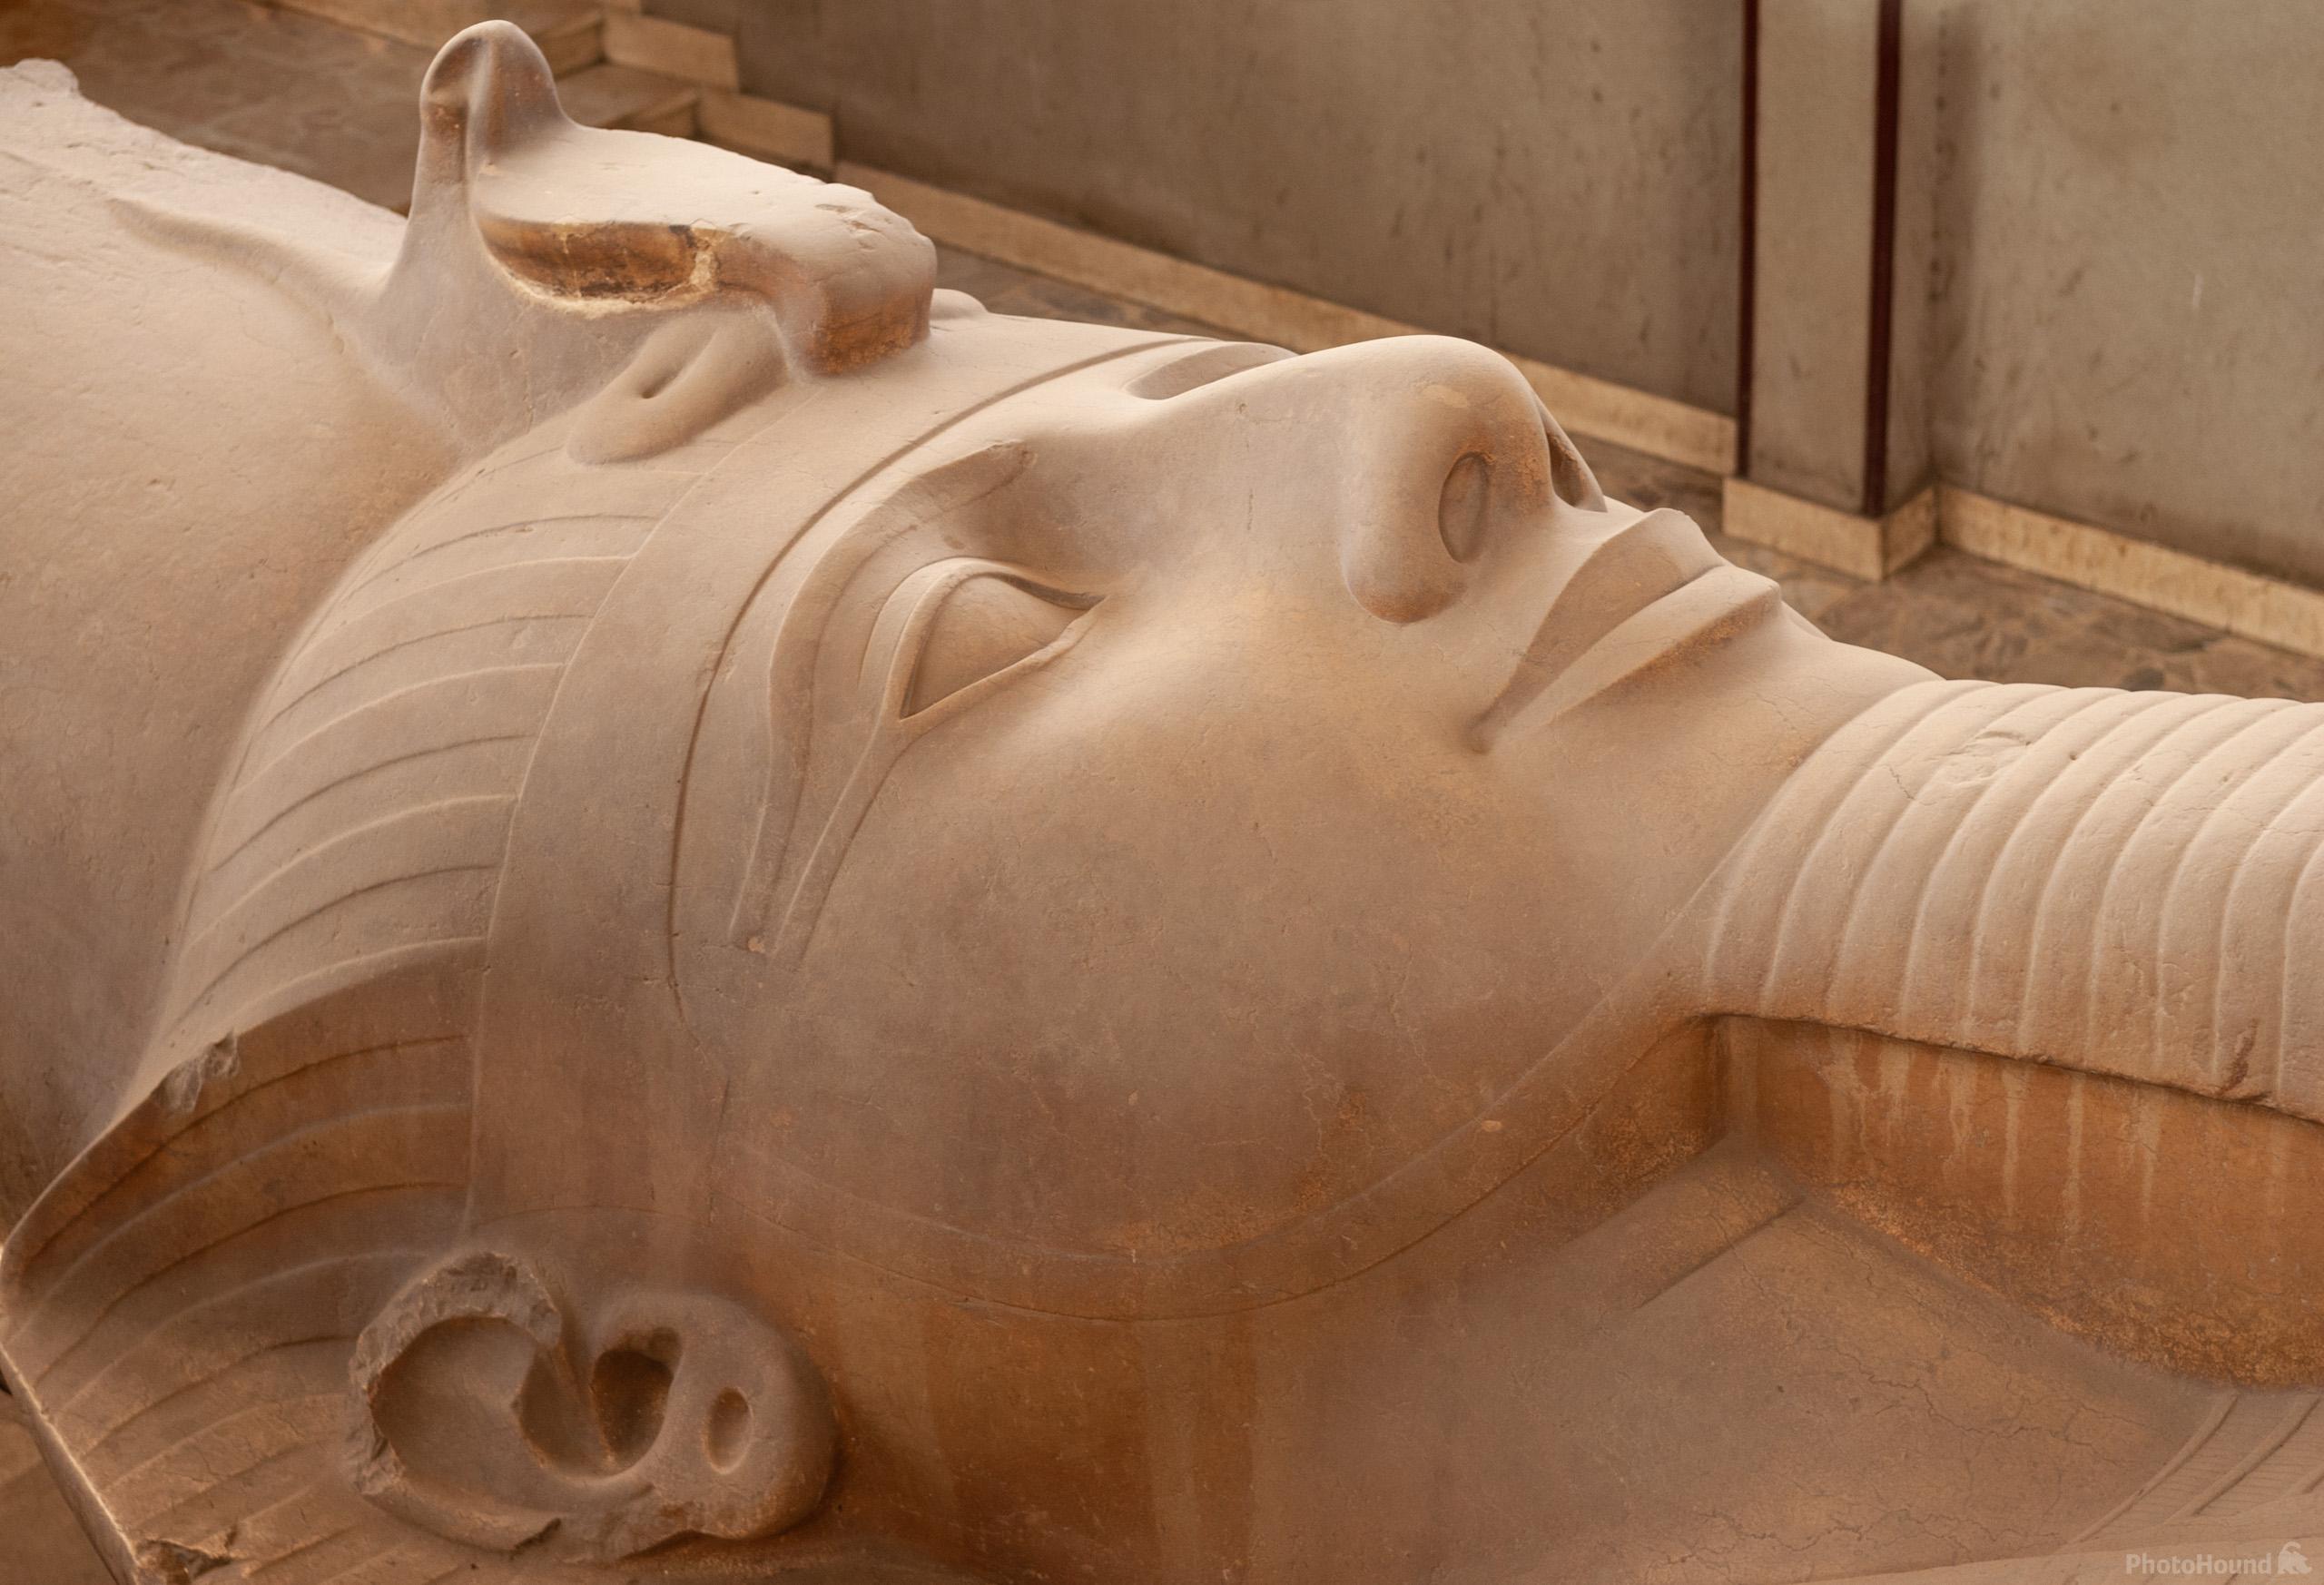 Image of Colossus of Ramses II (Mit Rahina) by Luka Esenko